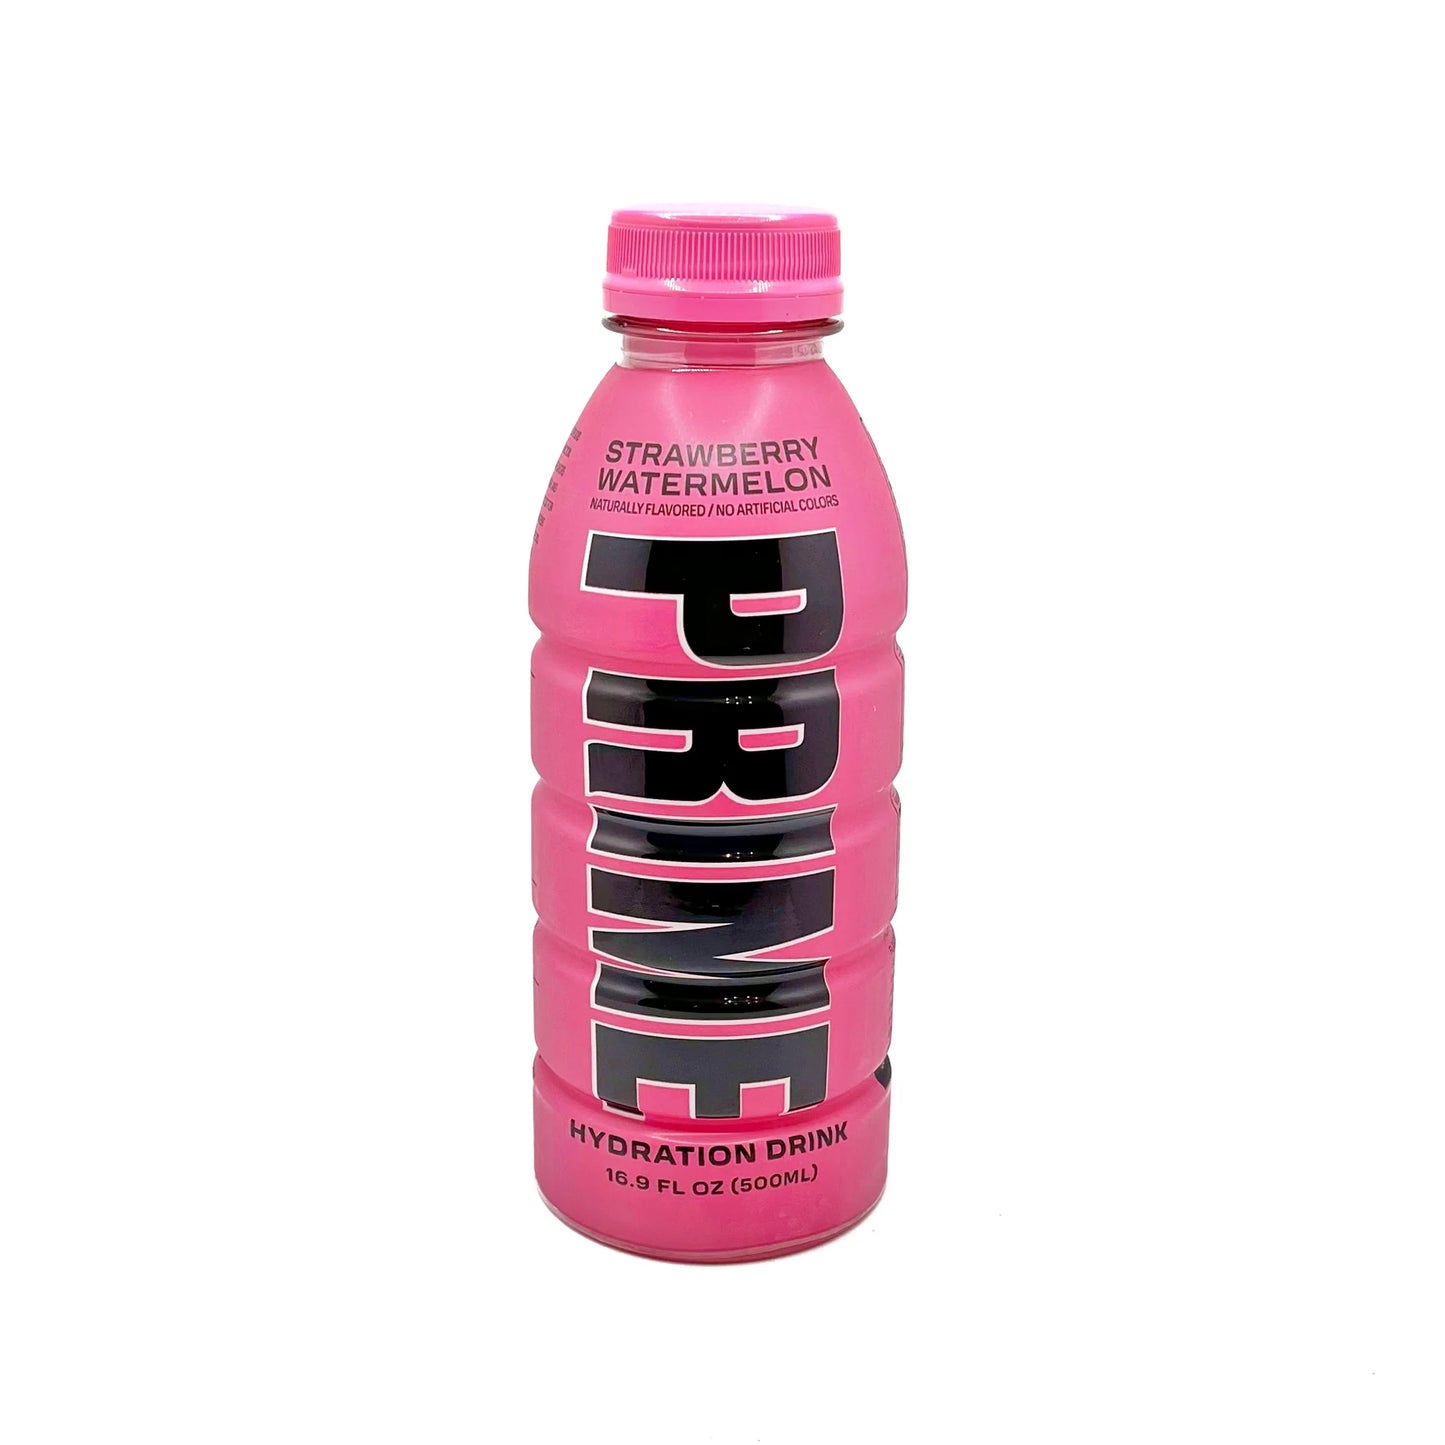 Prime Hydration Drink  Pixie Candy Shoppe Strawberry watermelon  